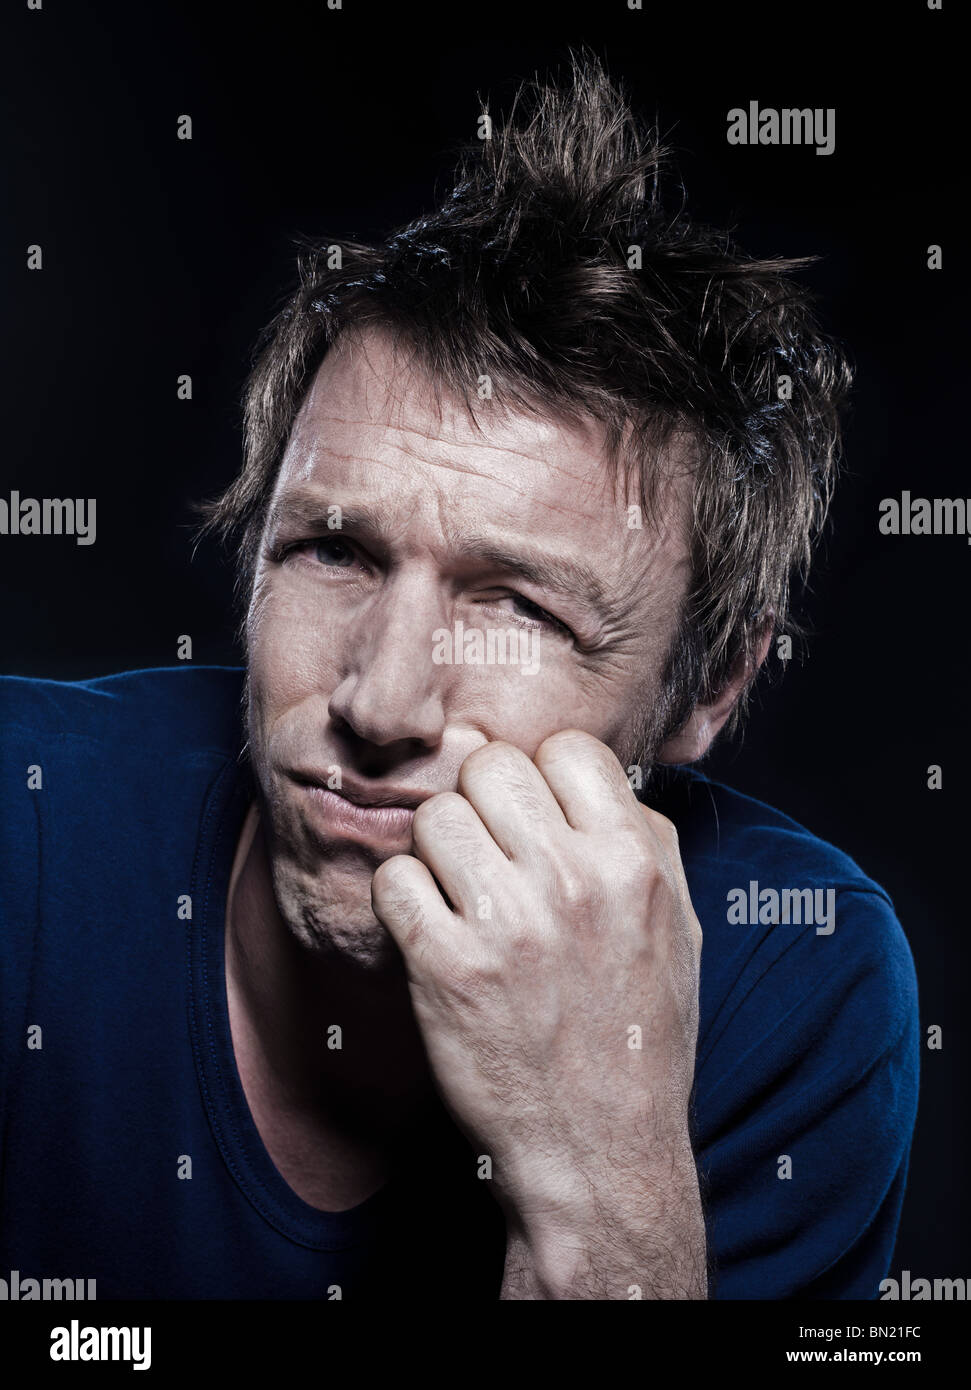 studio portrait on black background of a funny expressive caucasian man puckering sad sullen Stock Photo